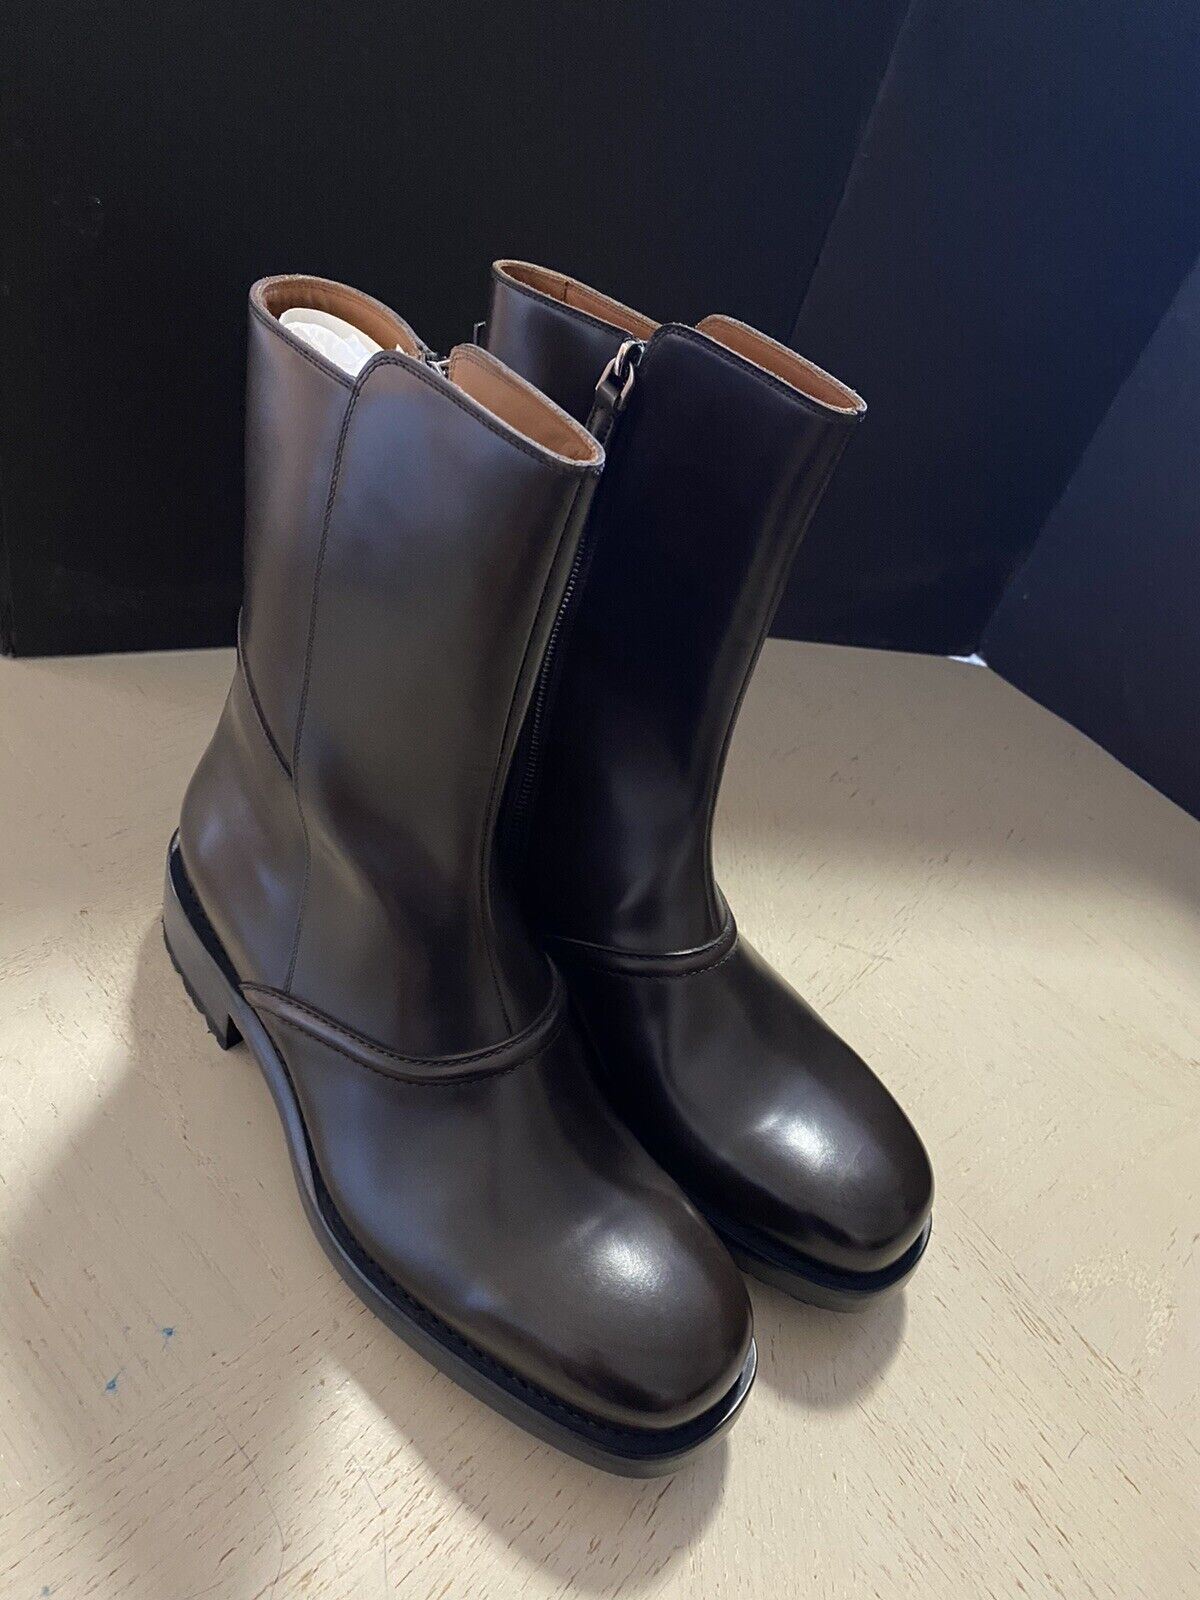 New $1595 Ermenegildo Zegna Couture Calfskin Leather Boots Shoes DK Brown 10 US